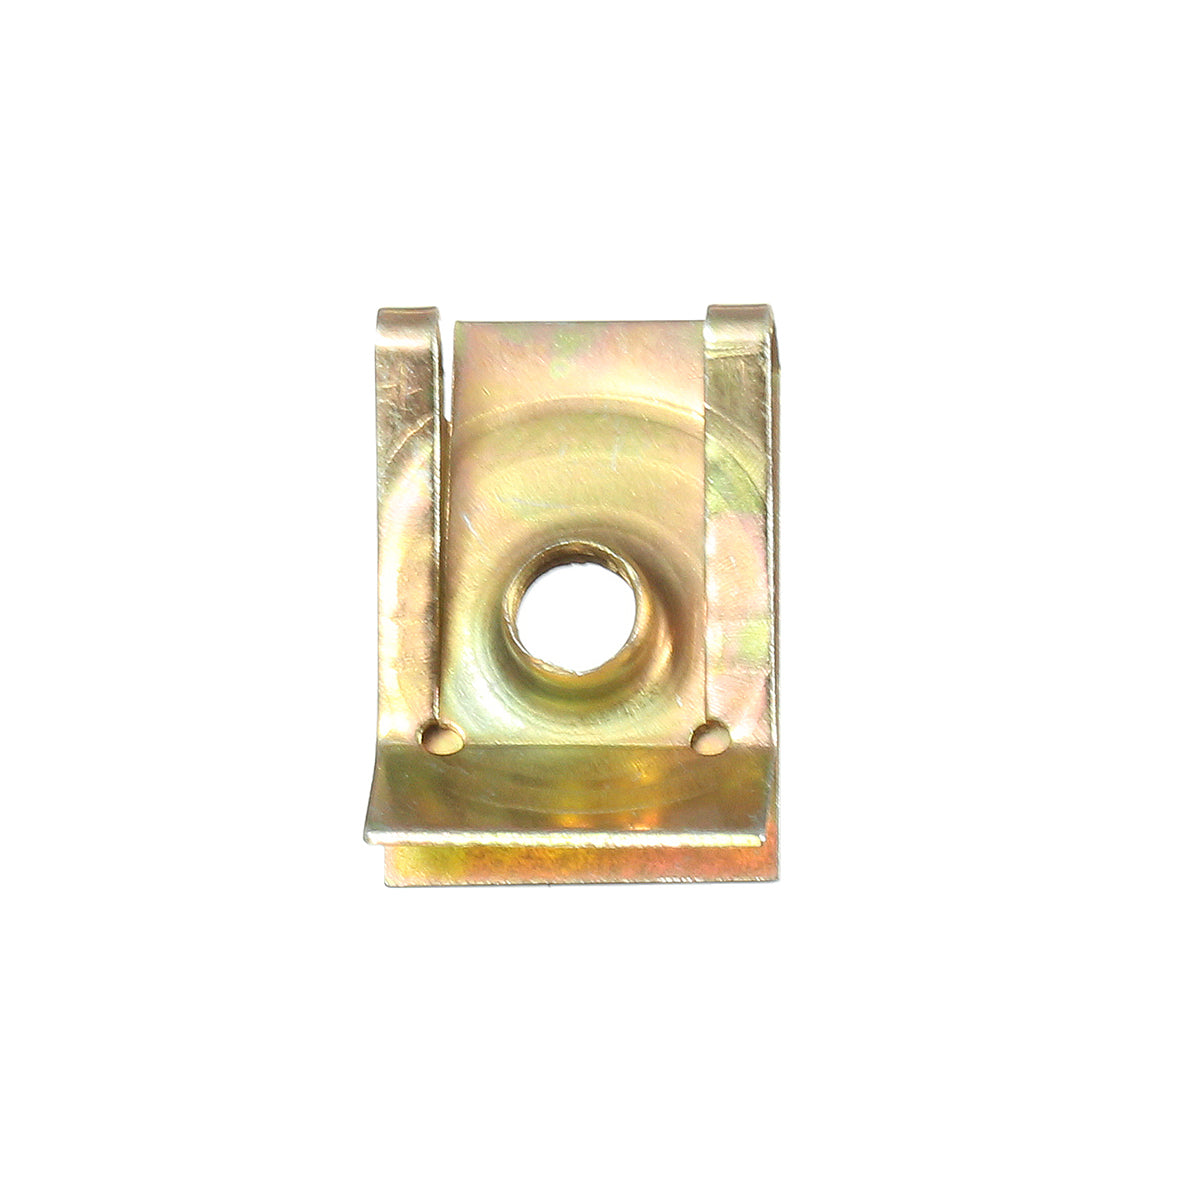 Pale Goldenrod M5 5mm Tread Panel Mounting Clamp Spire Lug Nut Fairing Clip Fastener Speed Zinc